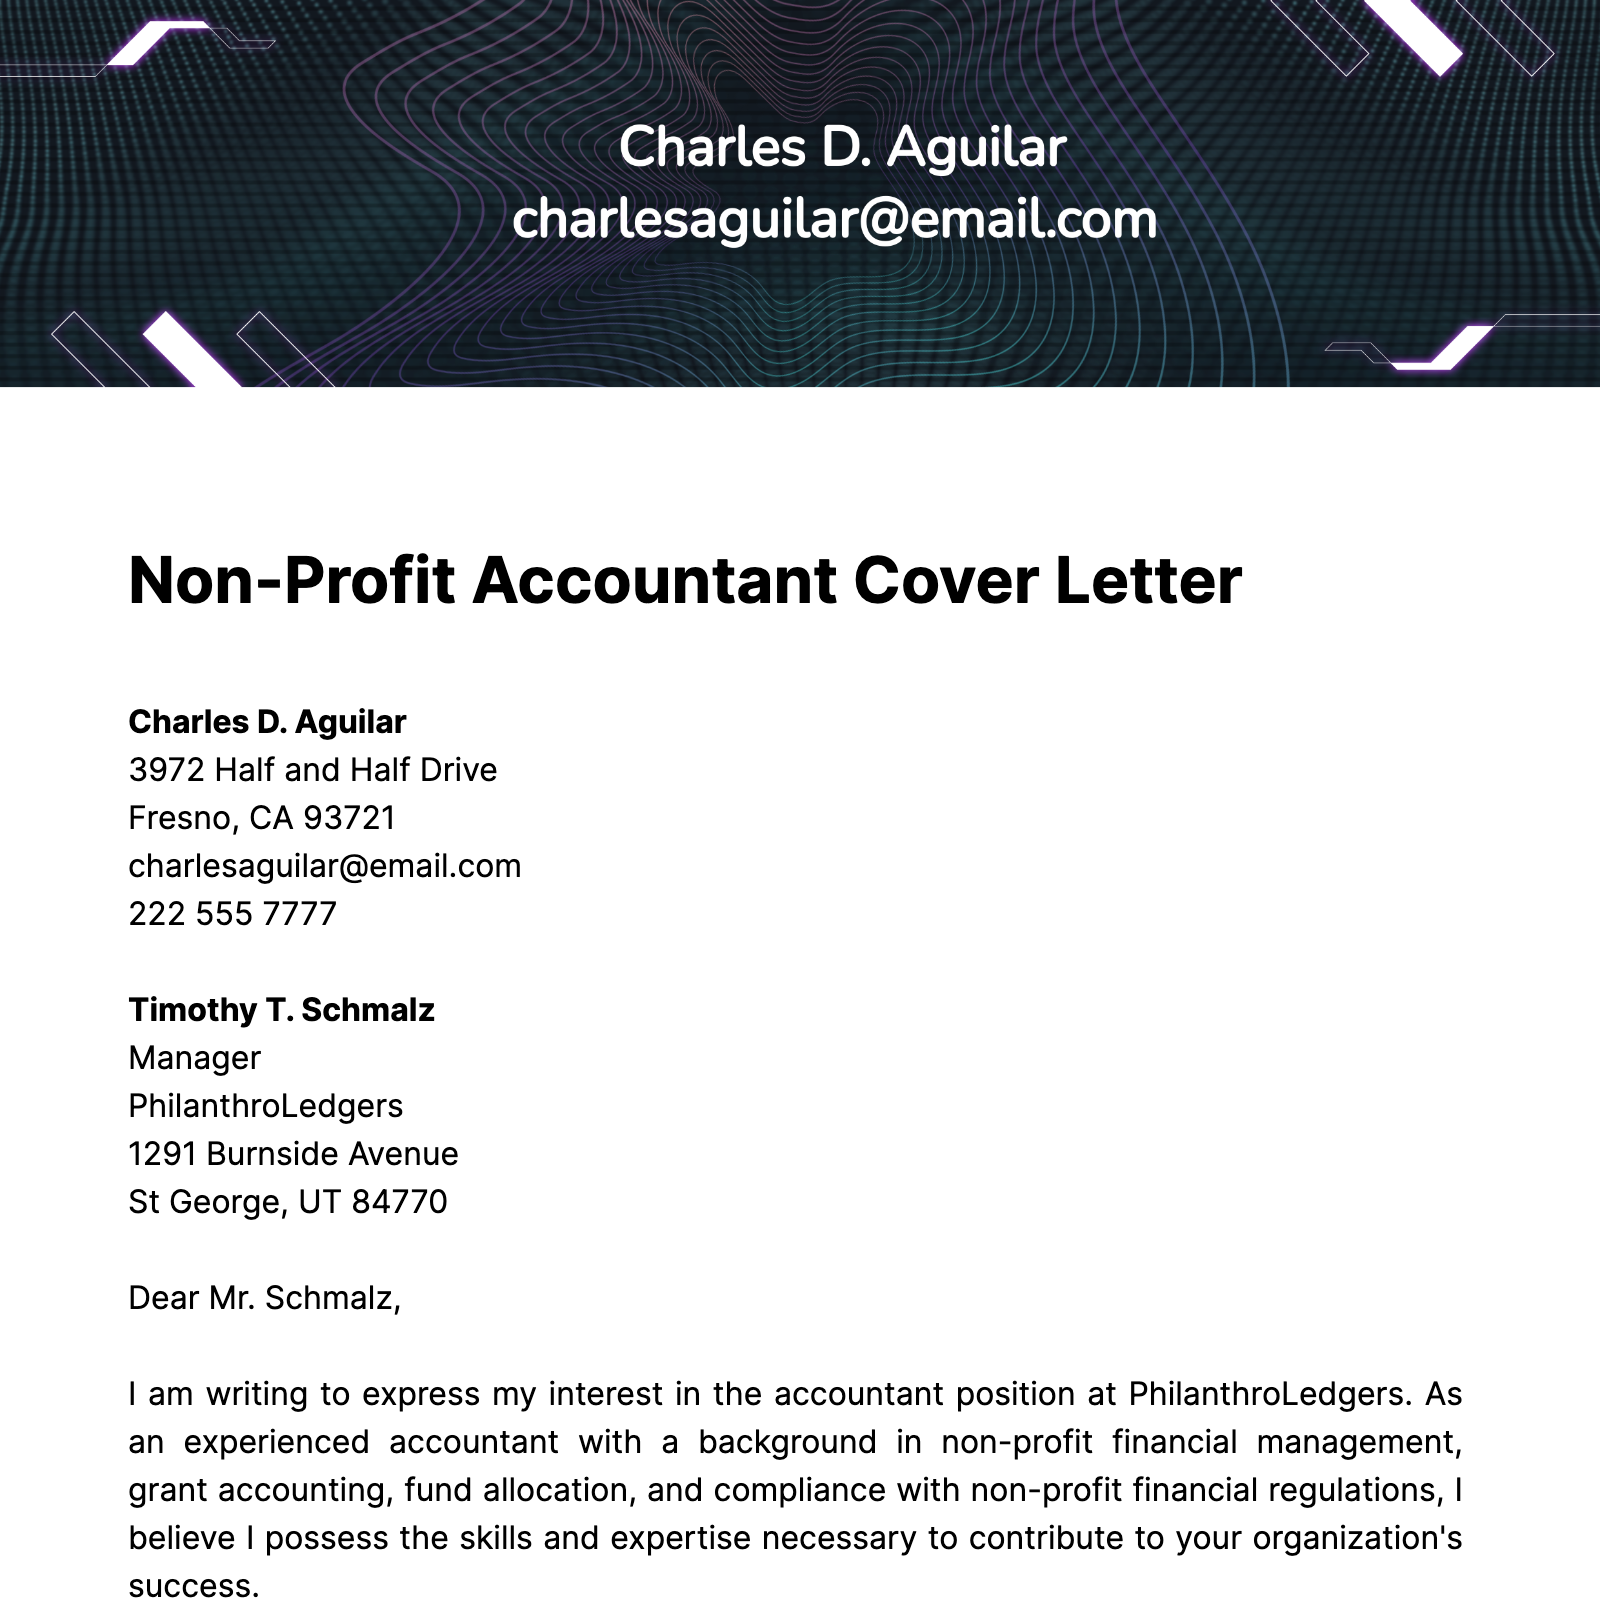 Non-Profit Accountant Cover Letter Template